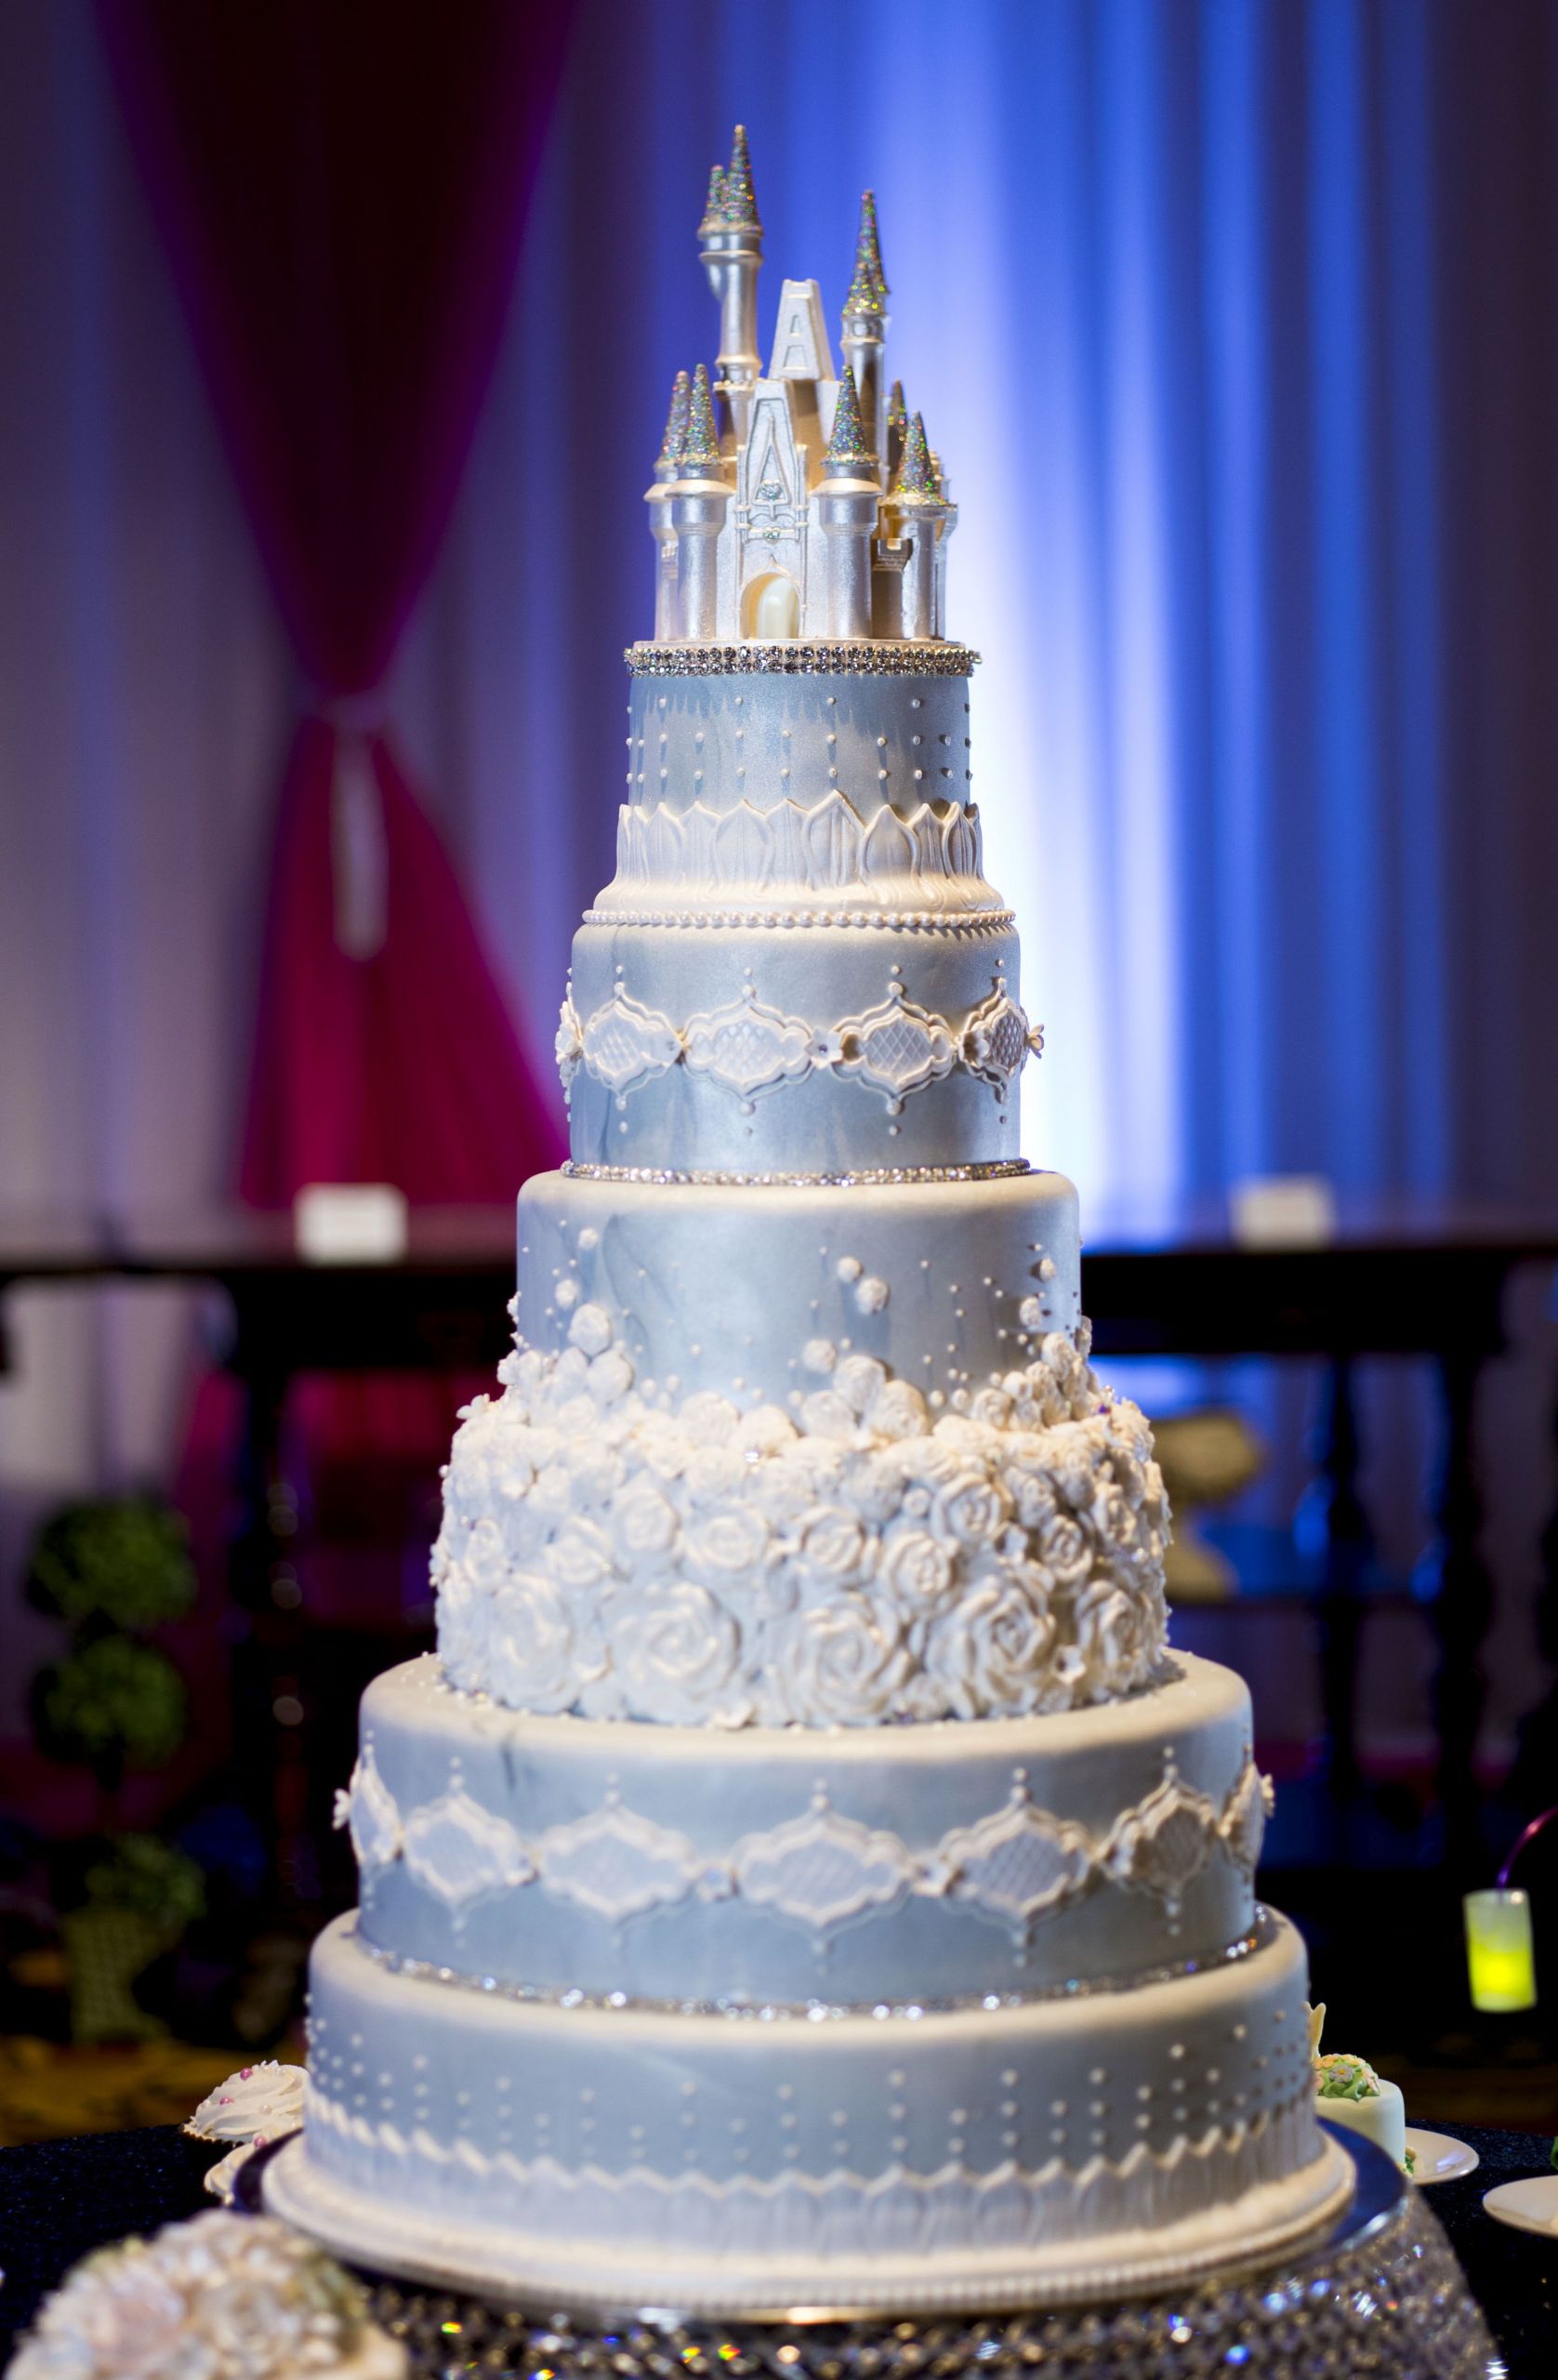 Castle Wedding Cake
 This Cinderella Castle wedding cake will mand attention